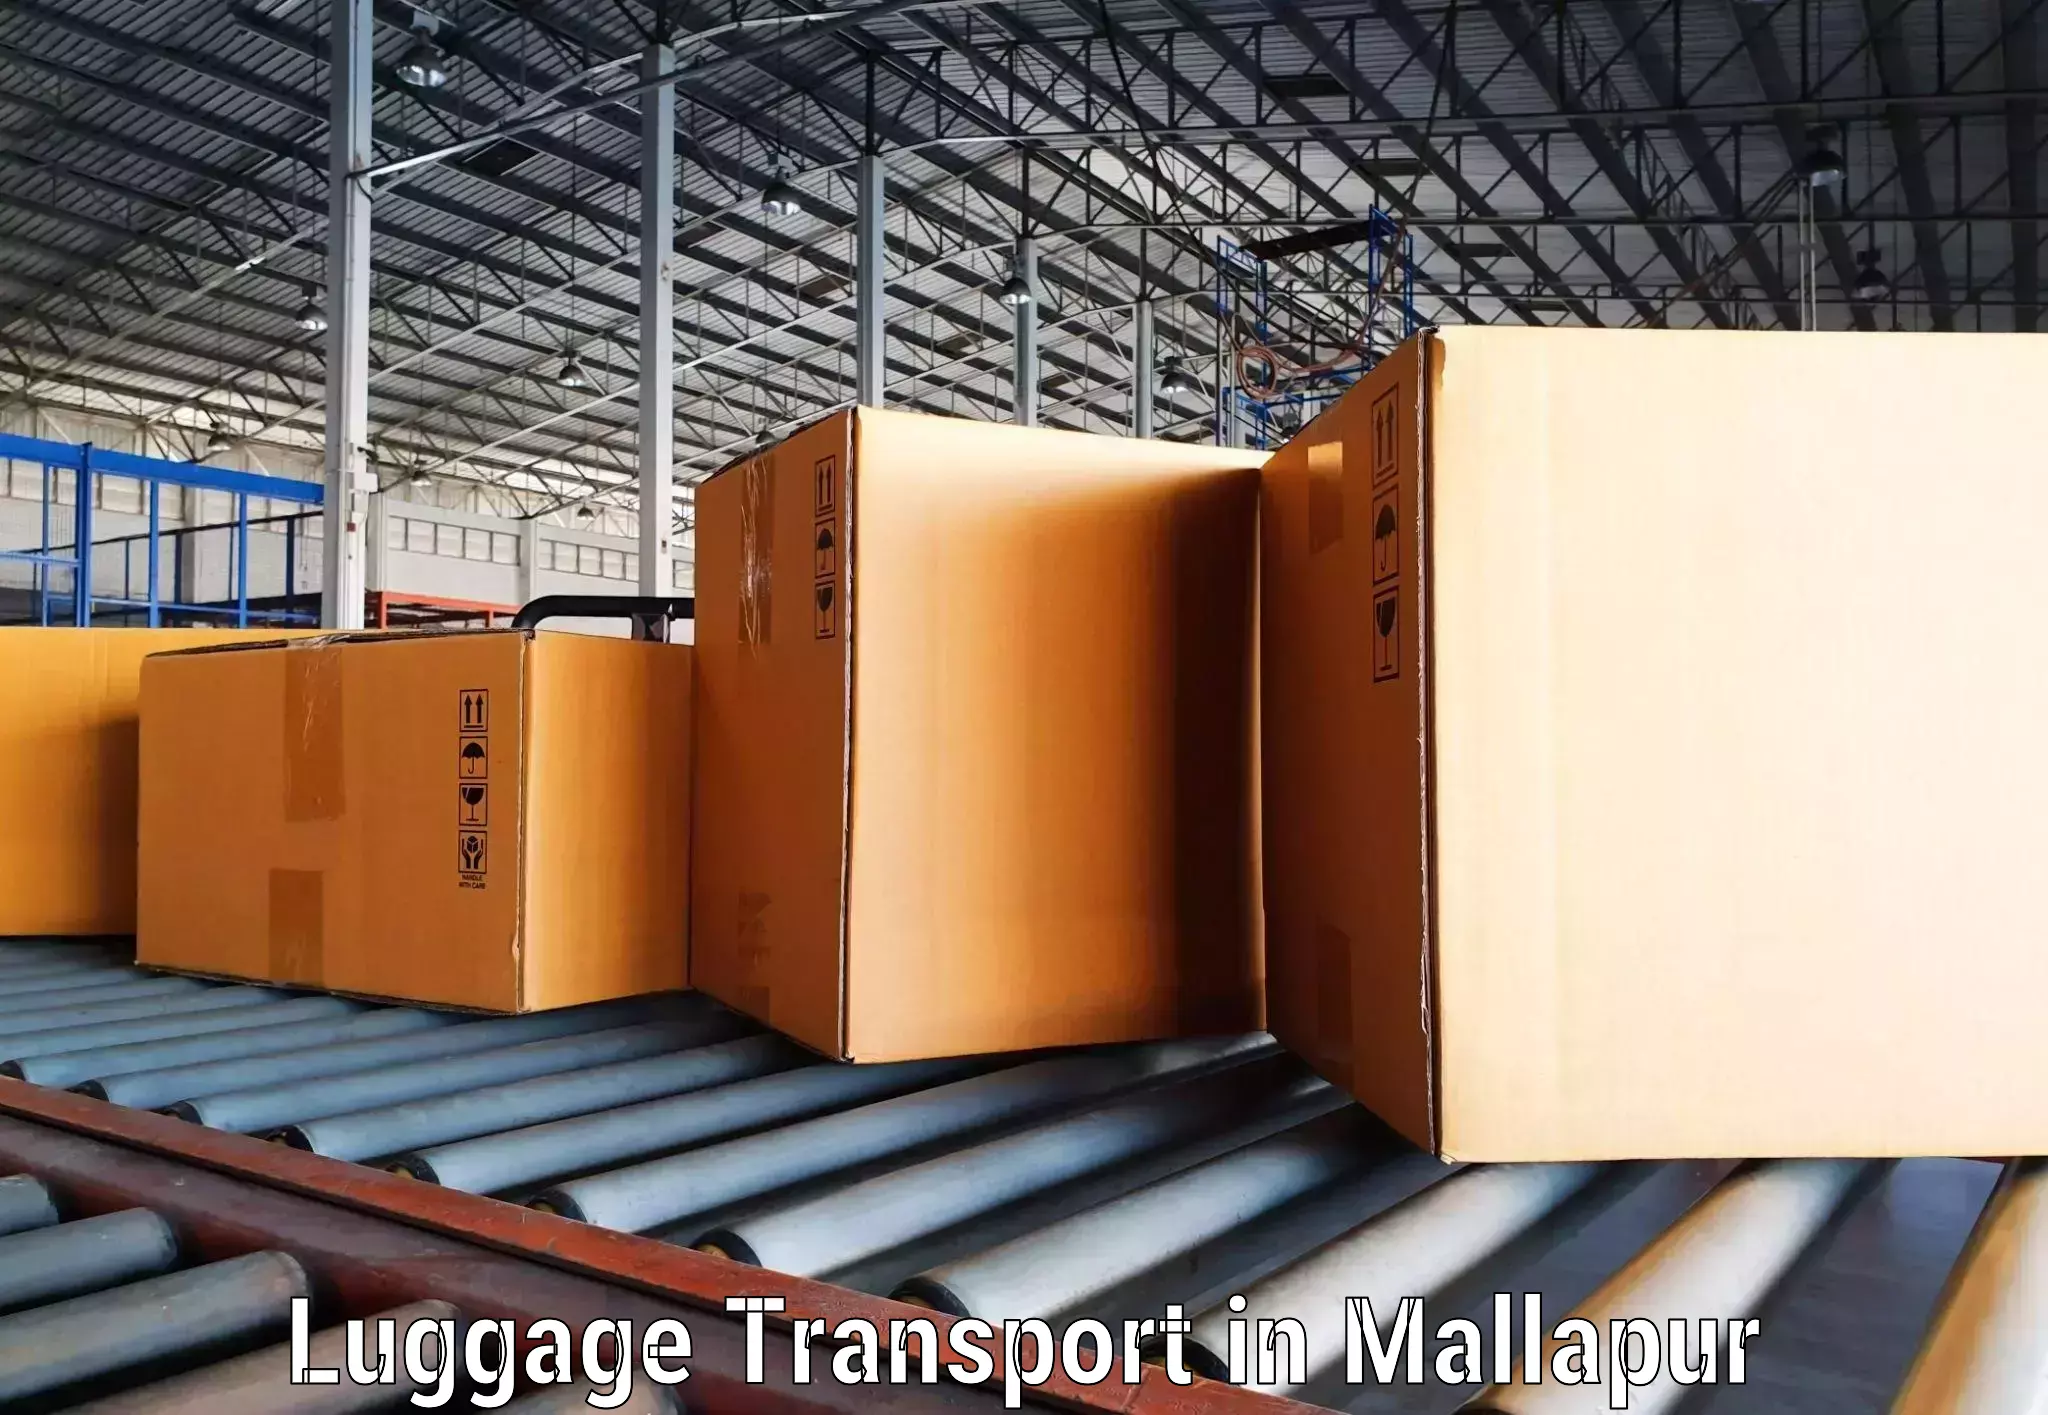 Luggage transit service in Mallapur